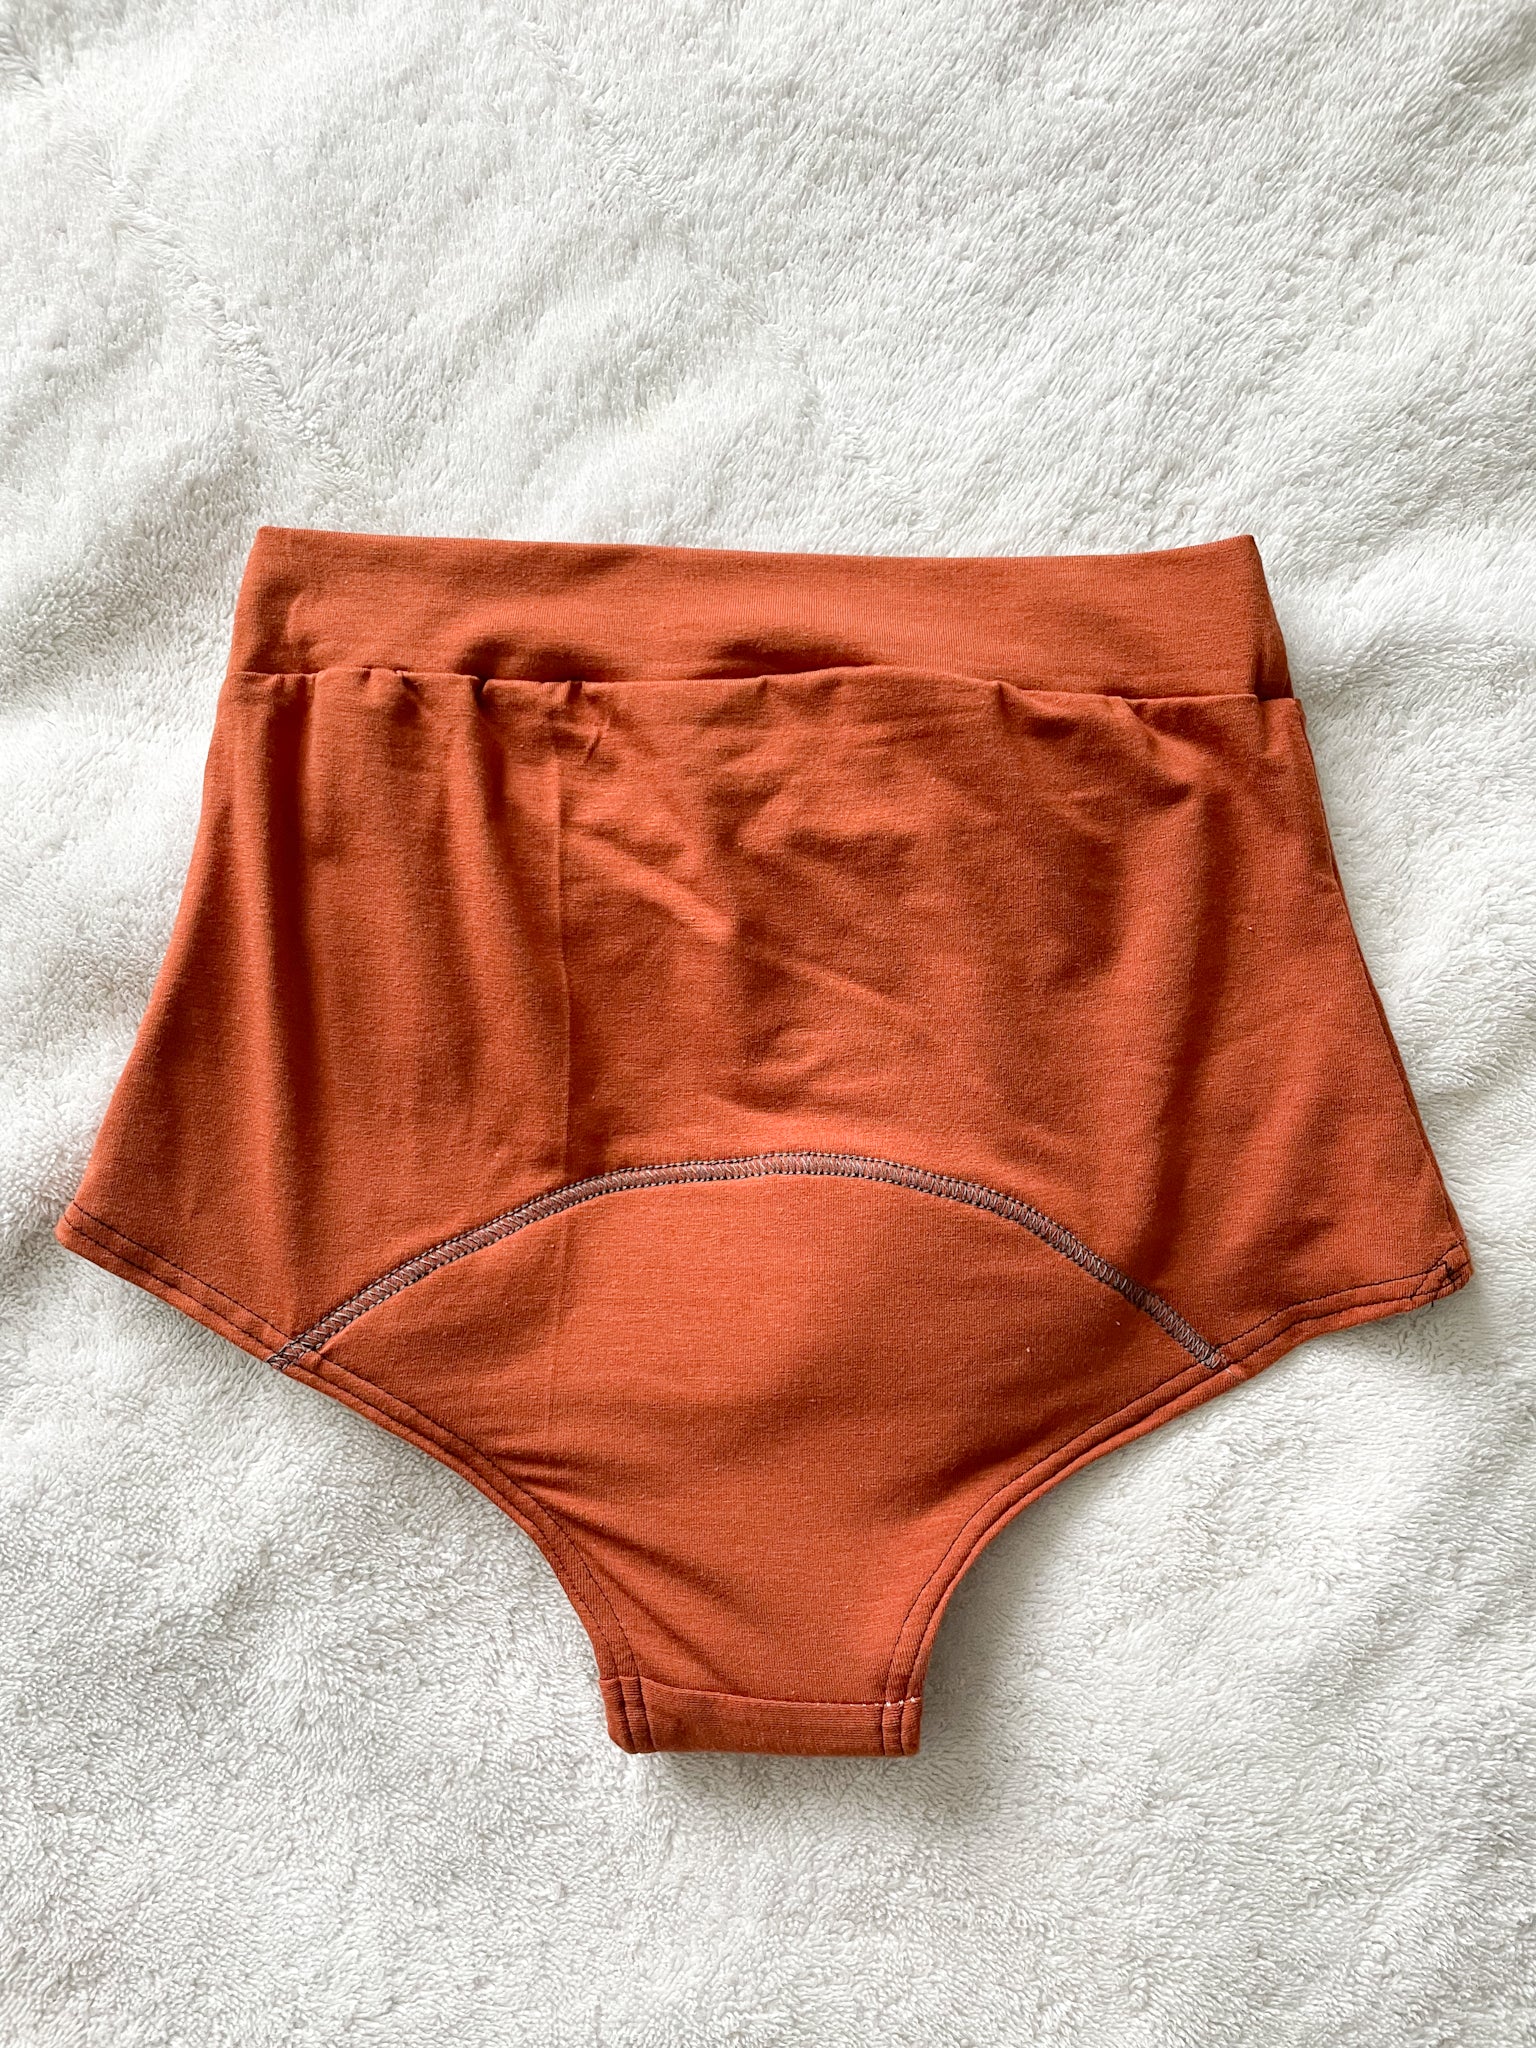 Period Panty Hipster period underwear red shop online